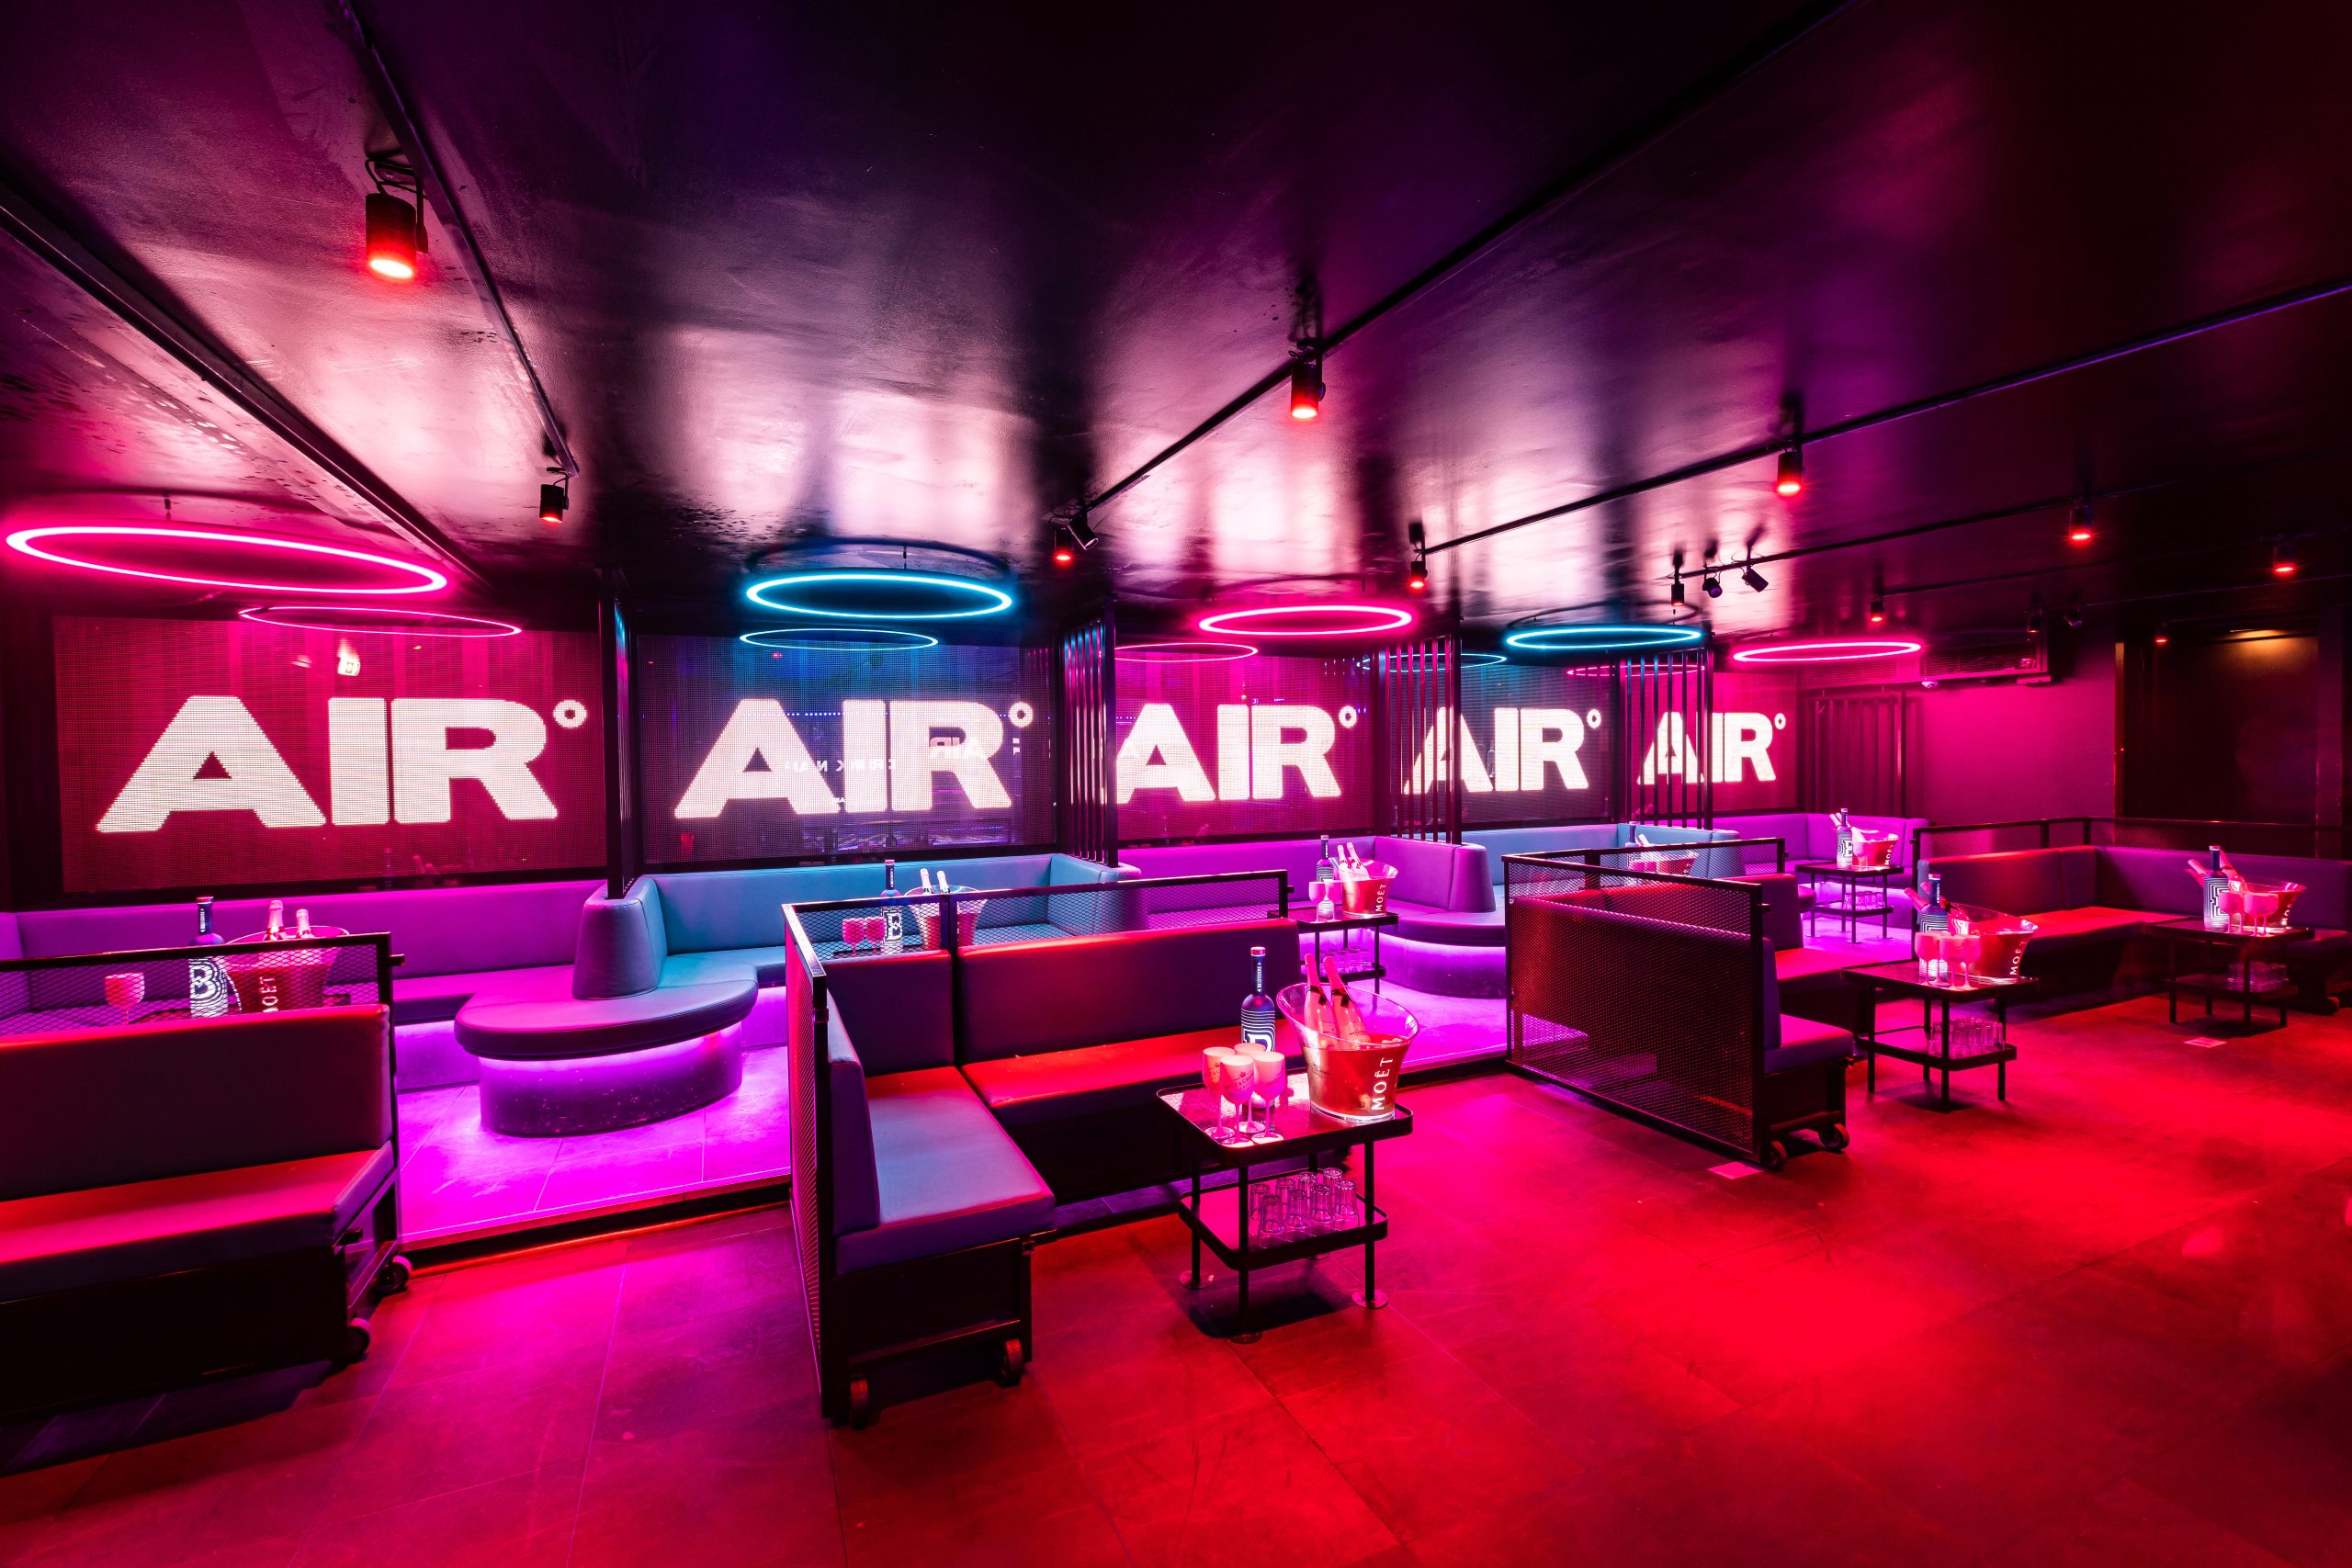 AIR Amsterdam - Nightclub Restaurant in Amsterdam, Netherlands